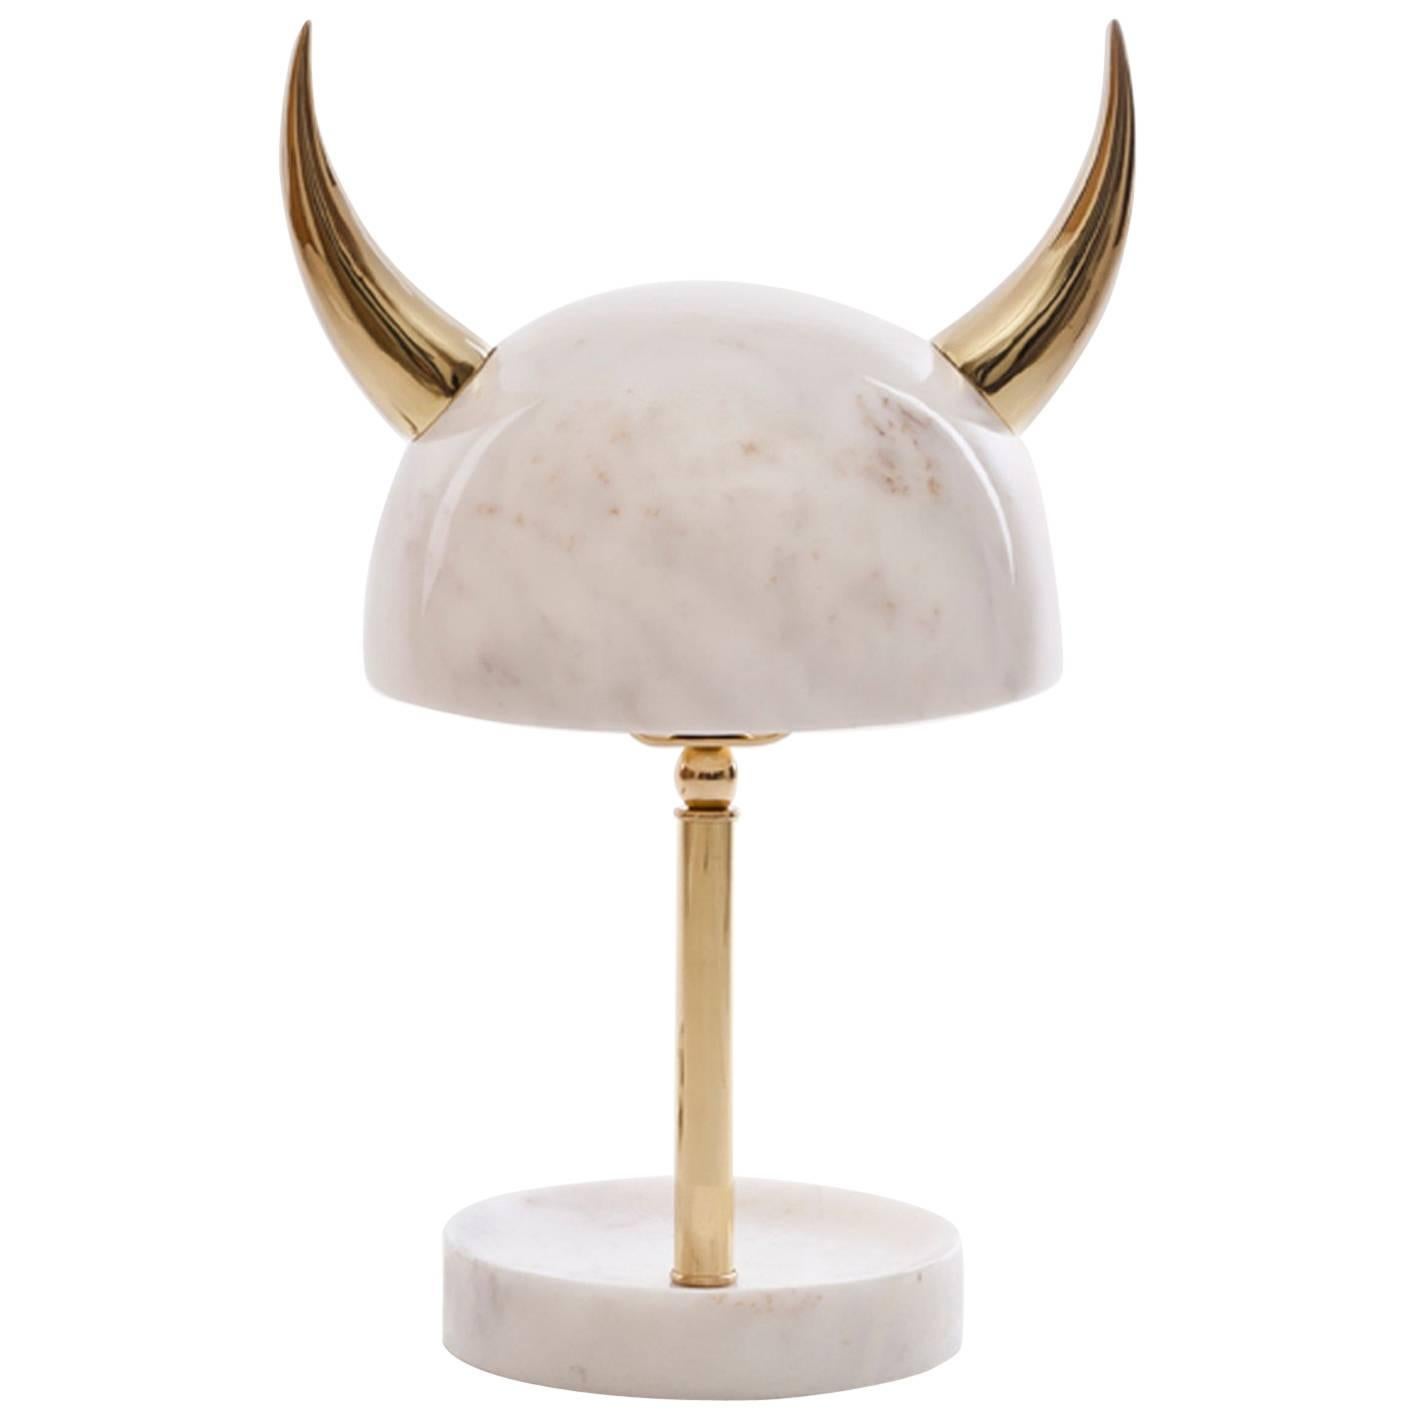 Lampe de bureau Min Lilla Viking Afyon en marbre avec cornes en laiton poli